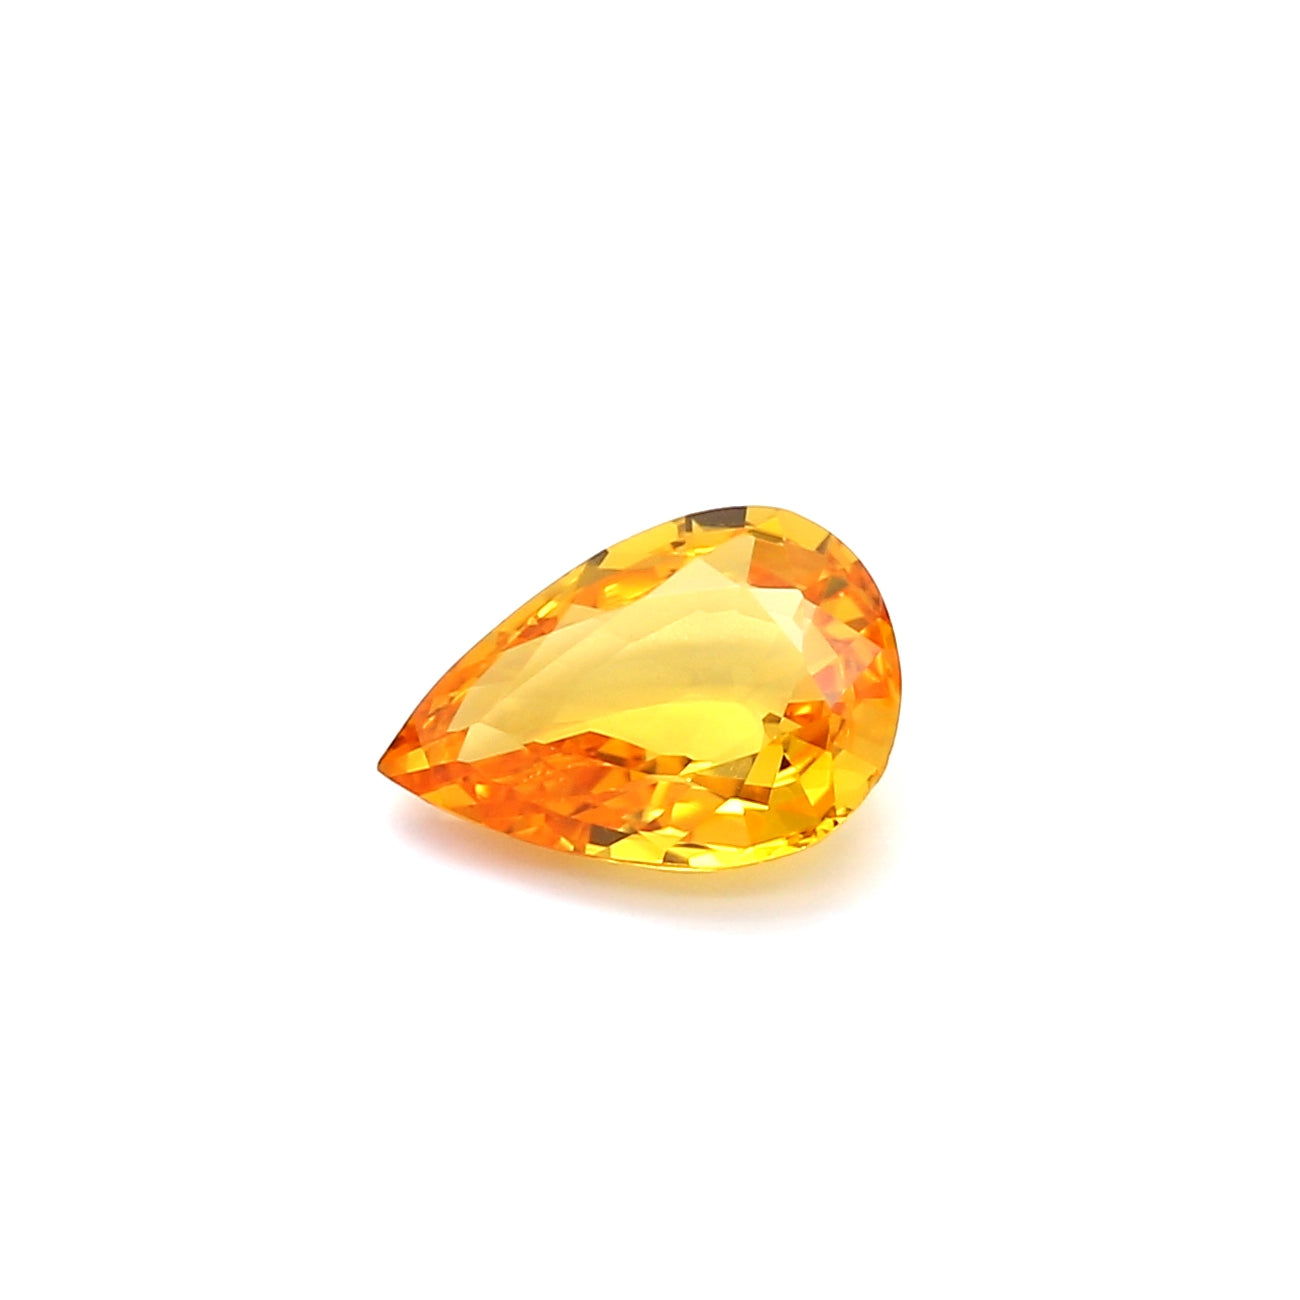 1.60ct Orangy Yellow, Pear Shape Sapphire, Heated, Sri Lanka - 9.35 x 6.70 x 3.23mm